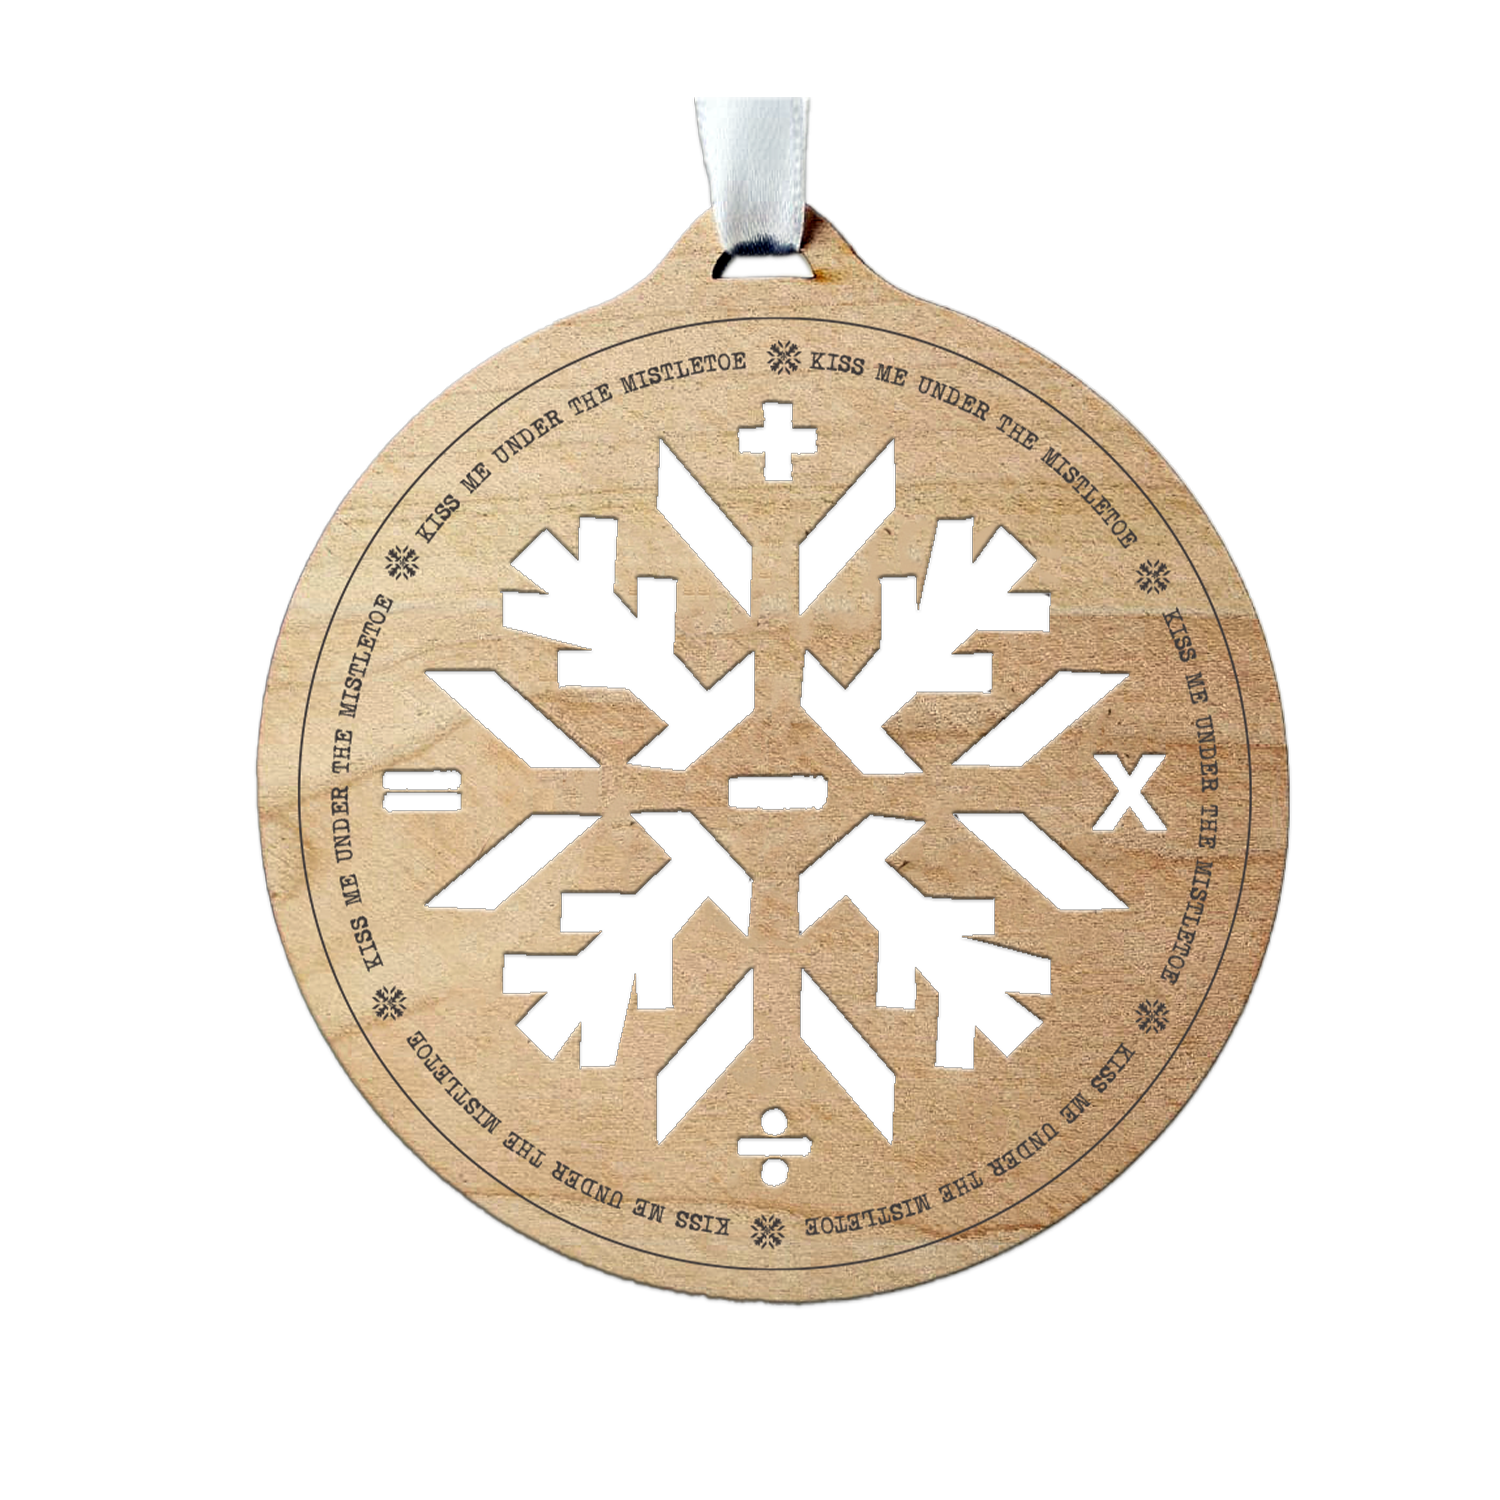 Wooden Snowflake Ornament Cherry Maple Ash – Dandelions